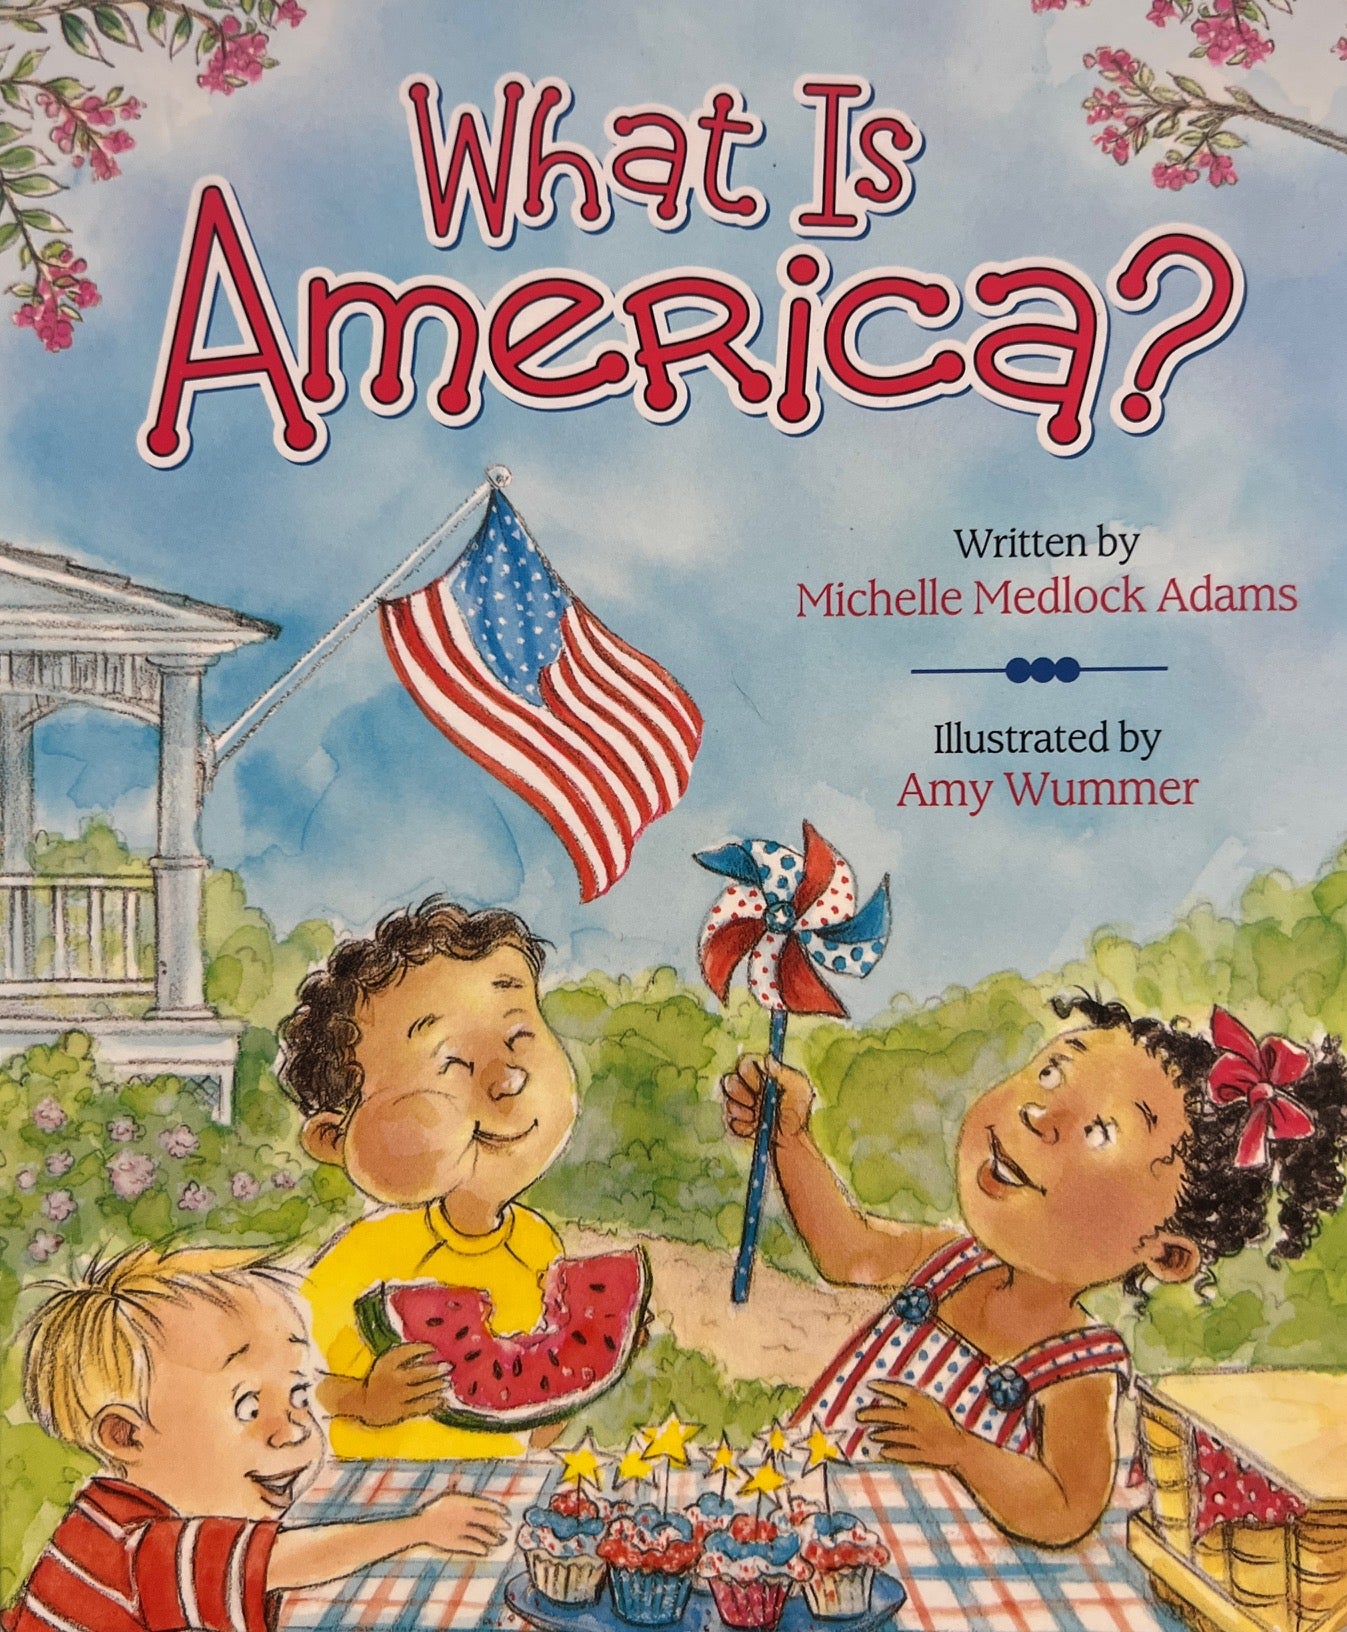 What is America? - written by Michelle Medlock Adams